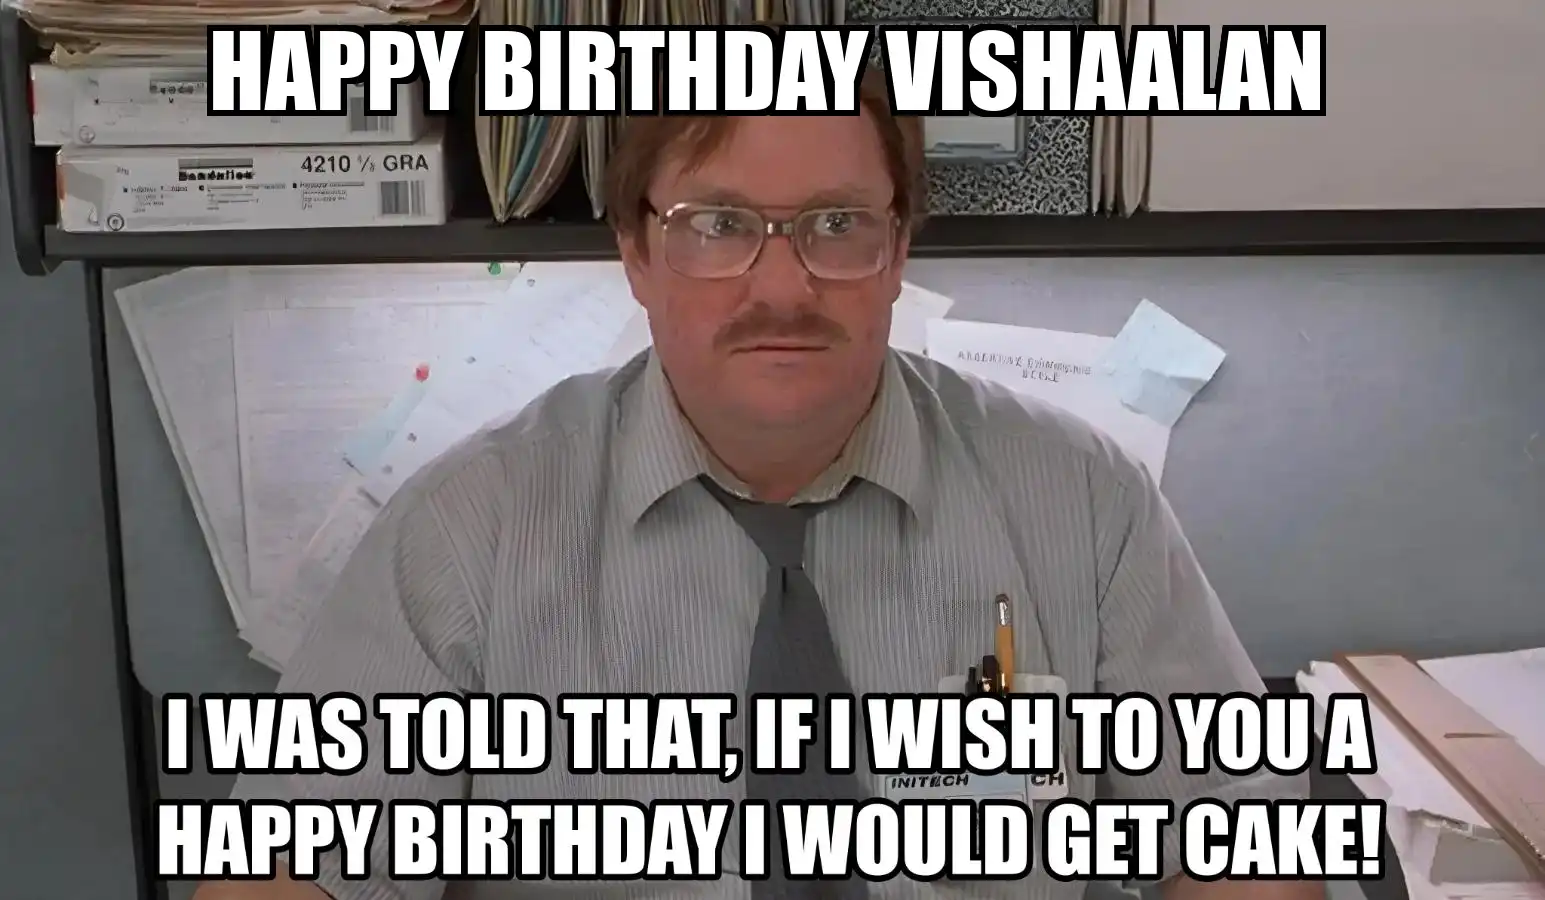 Happy Birthday Vishaalan I Would Get A Cake Meme